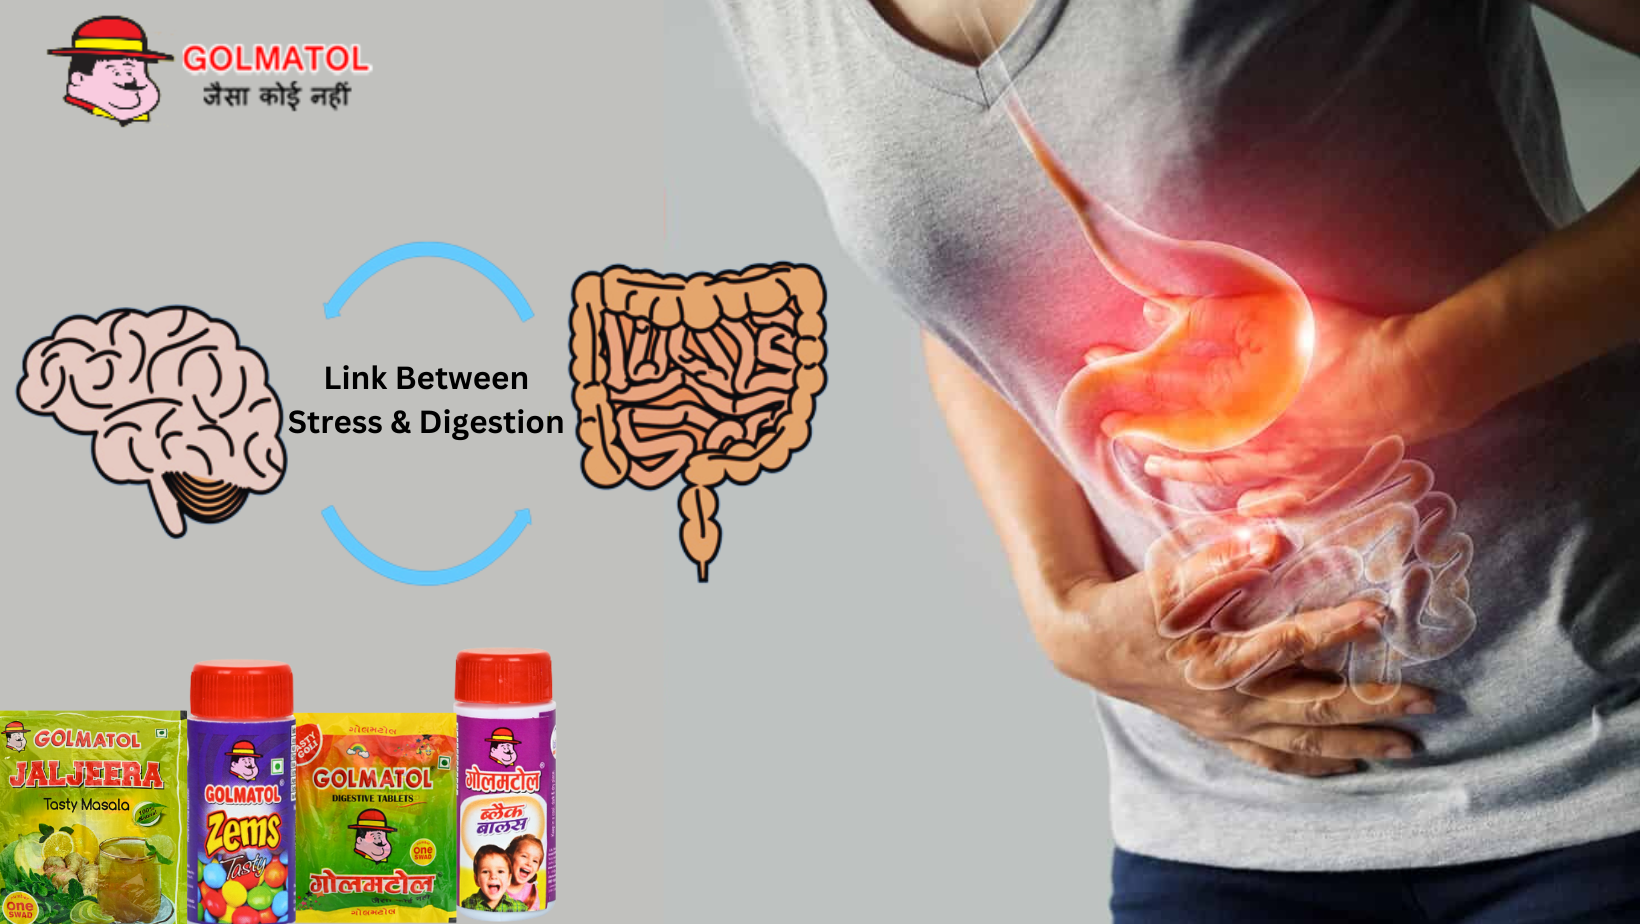 Golmatol Digestive Products